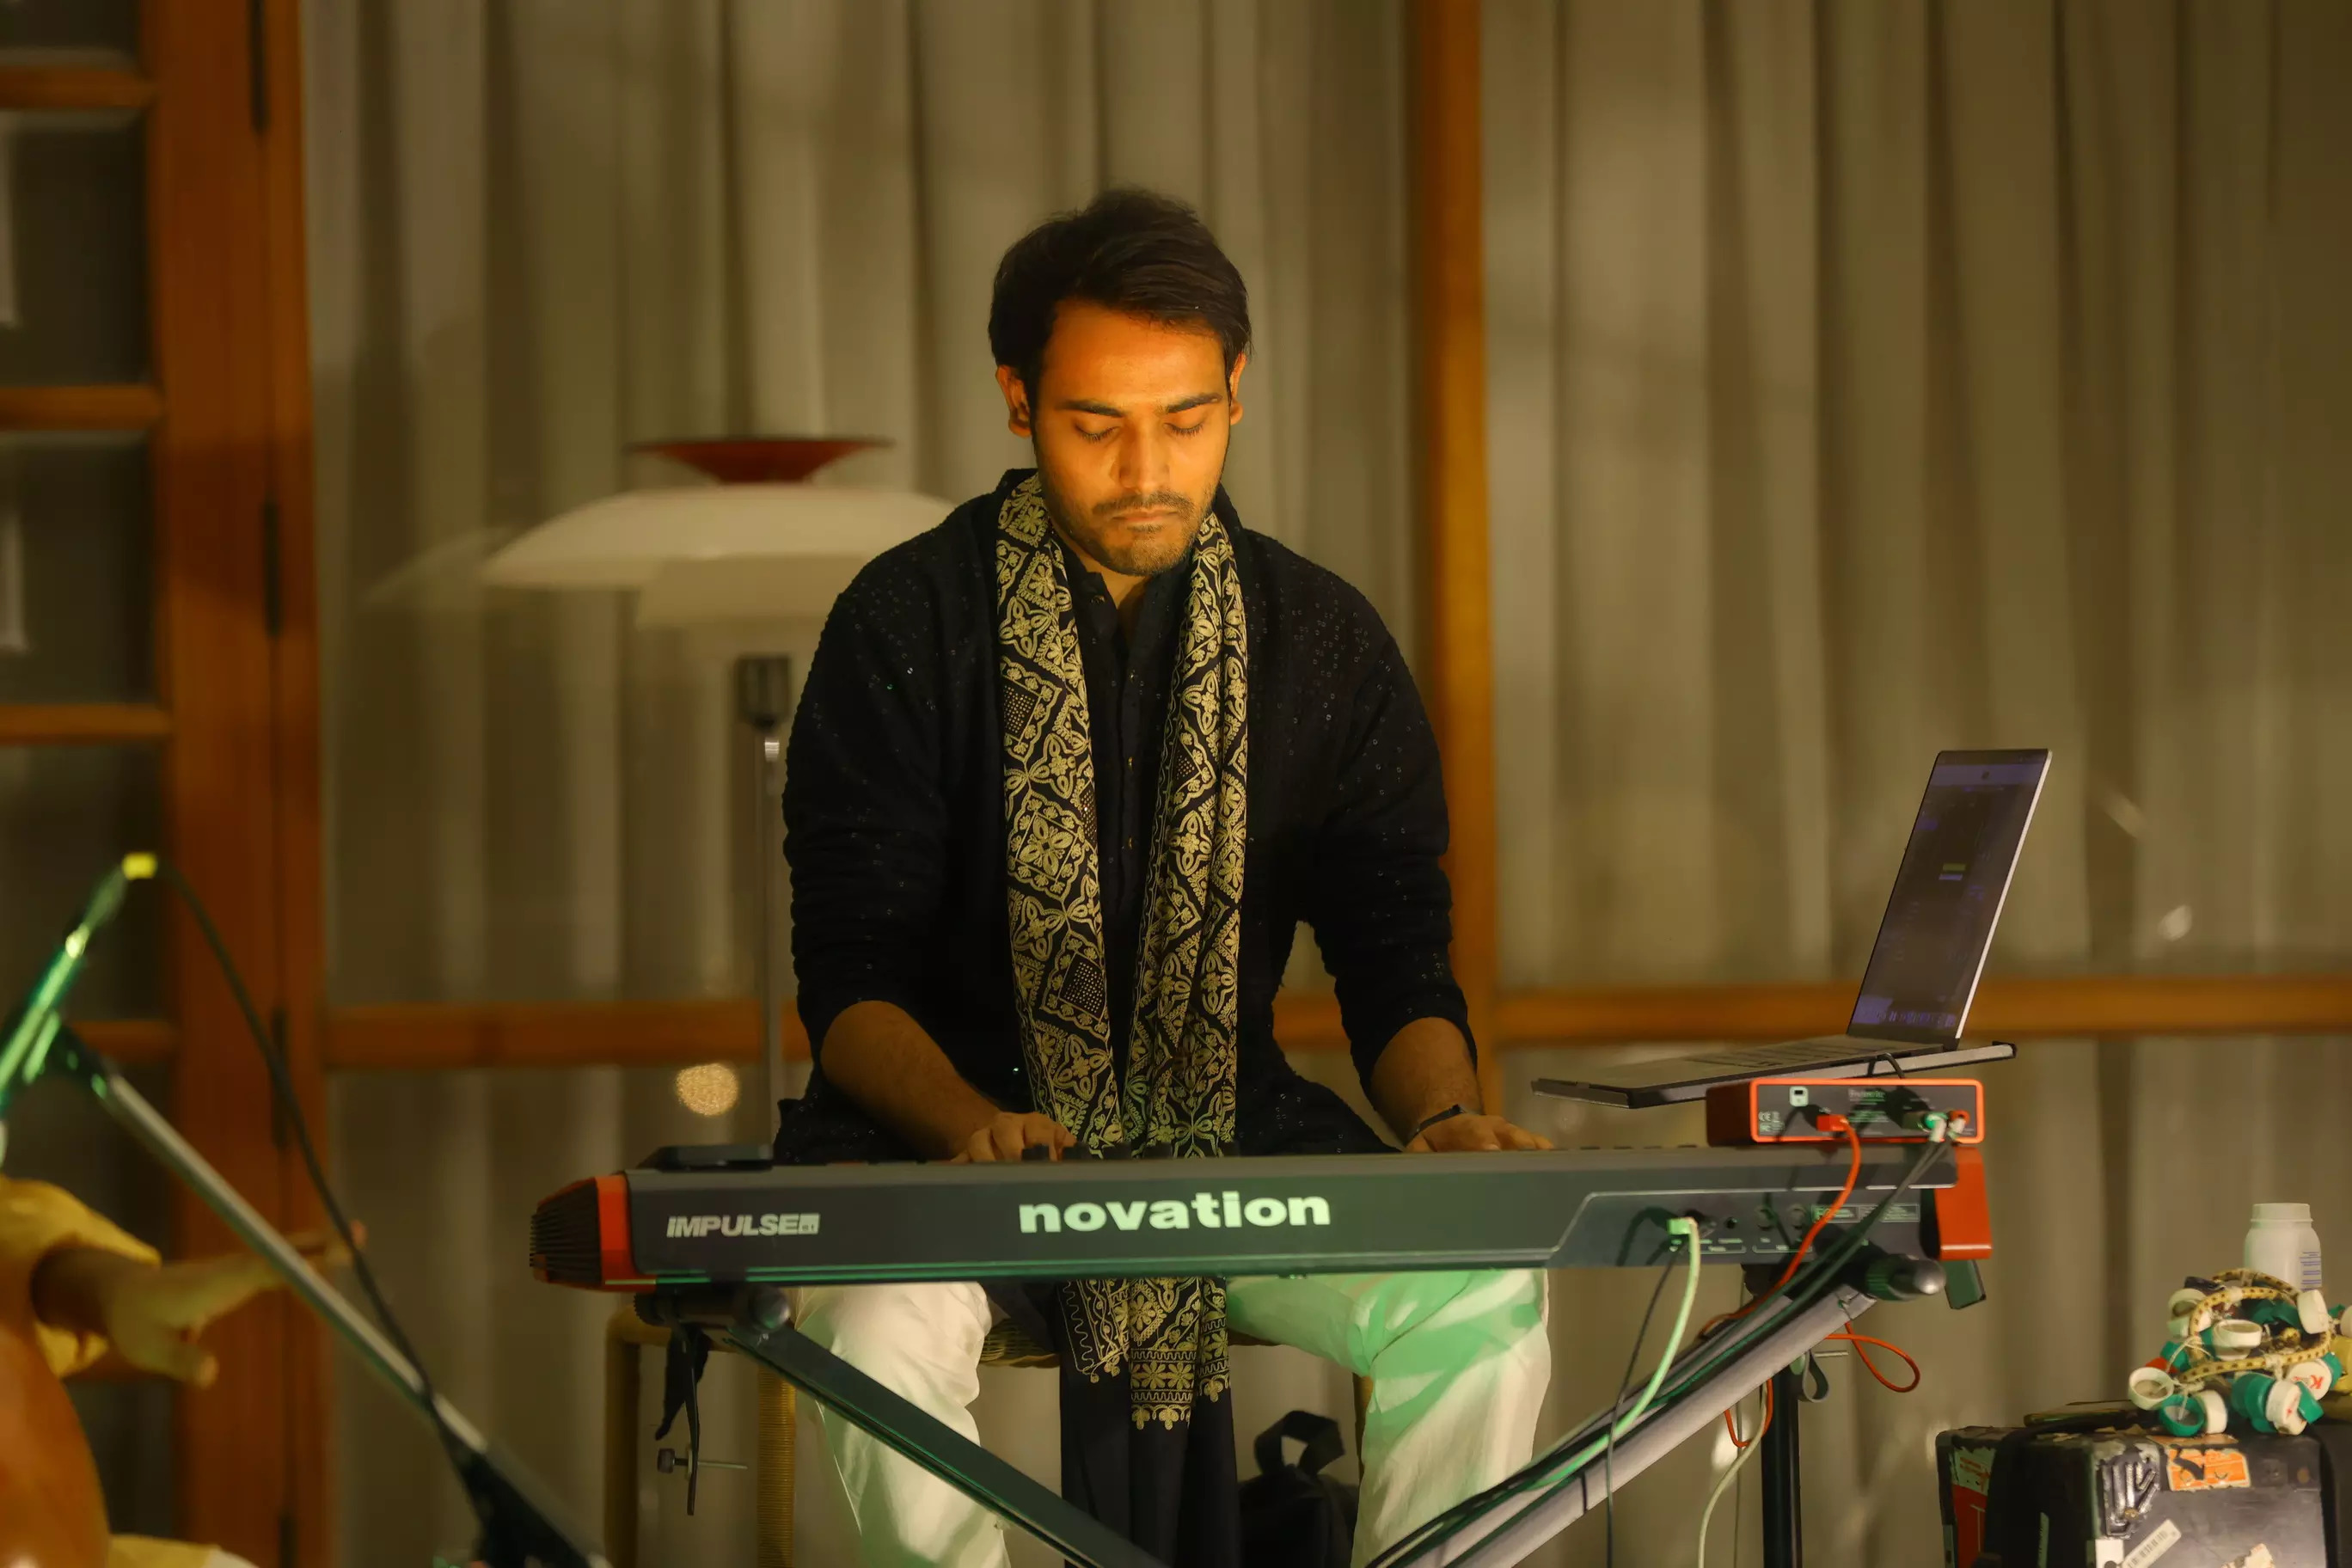 Yash Singh on the keyboard